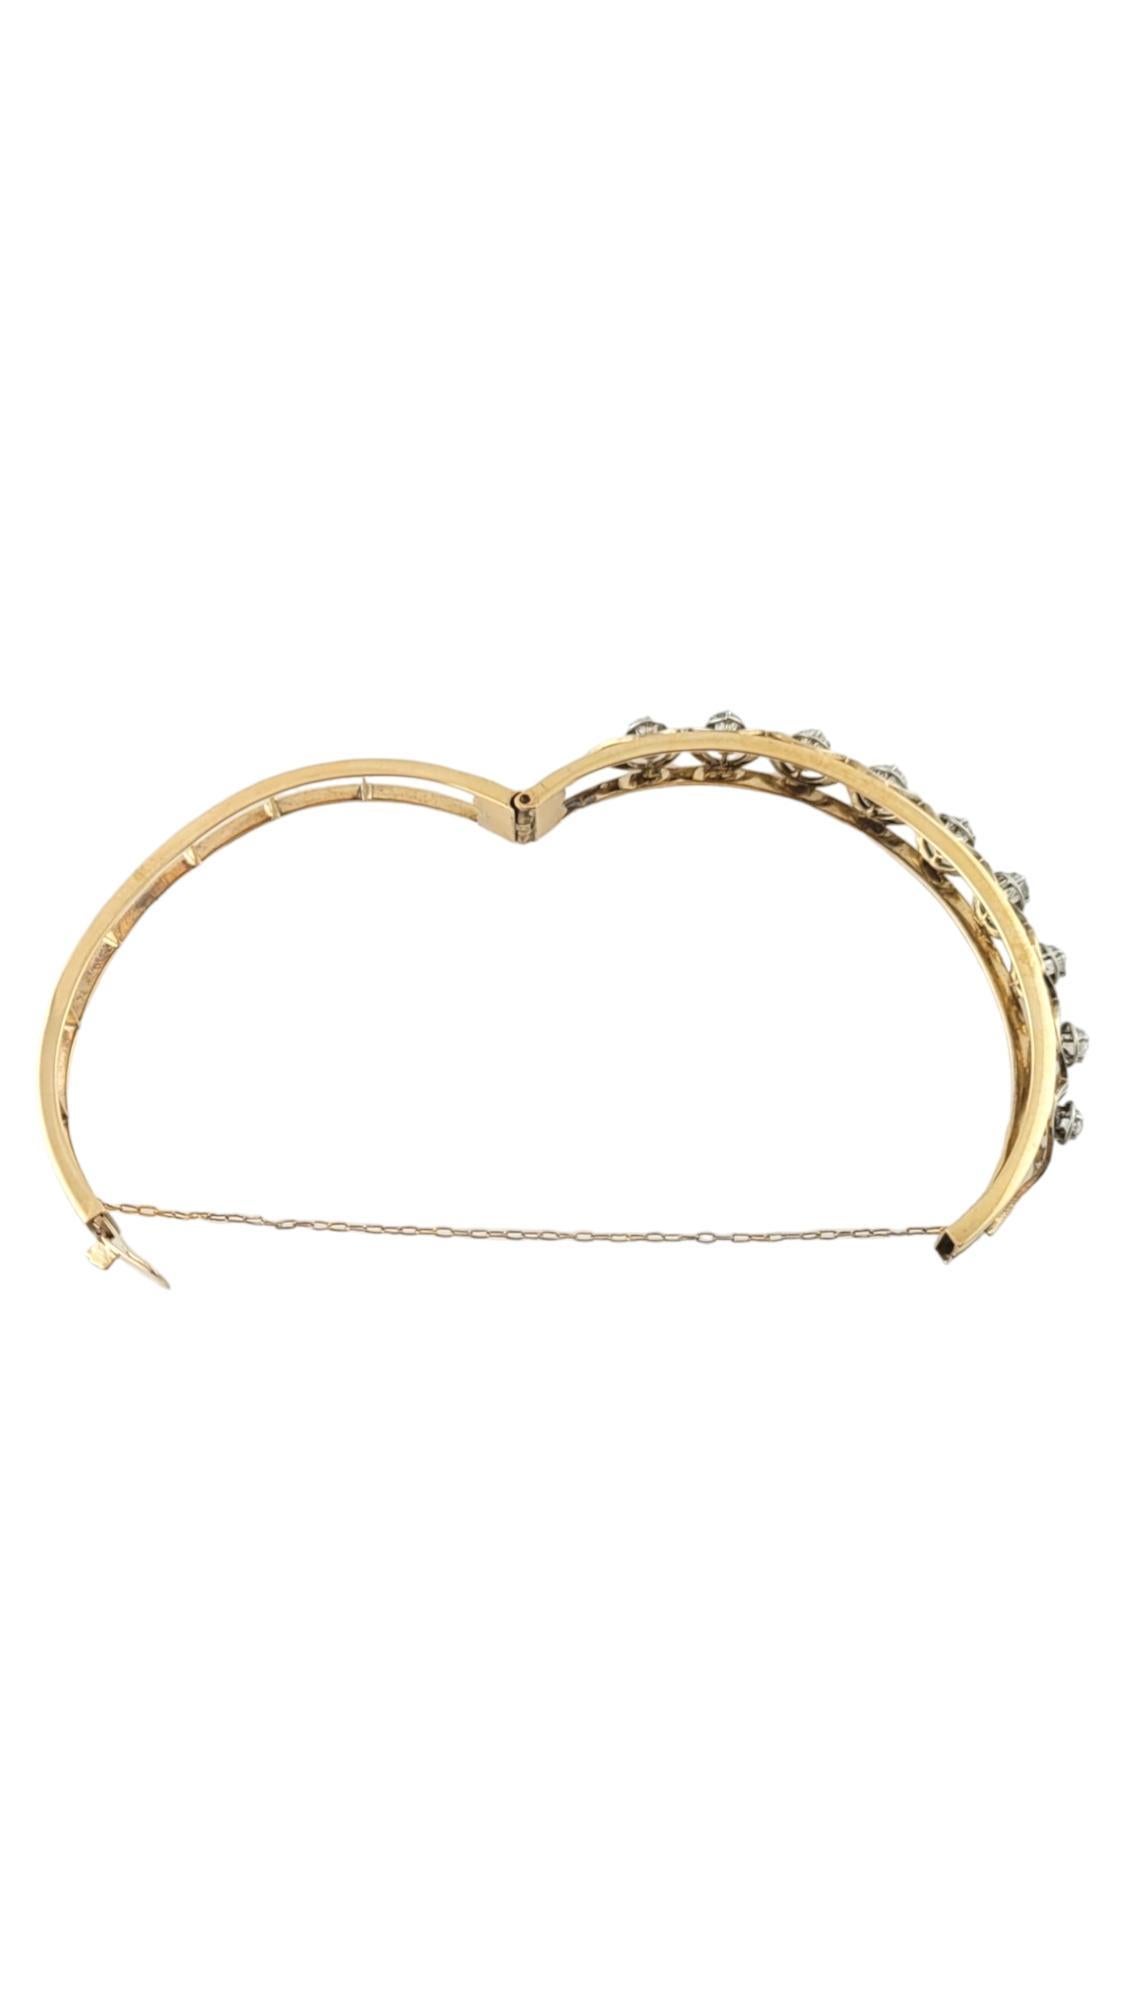 Women's Vintage 14 Karat Yellow/White Gold and Diamond Bangle Bracelet #16980 For Sale